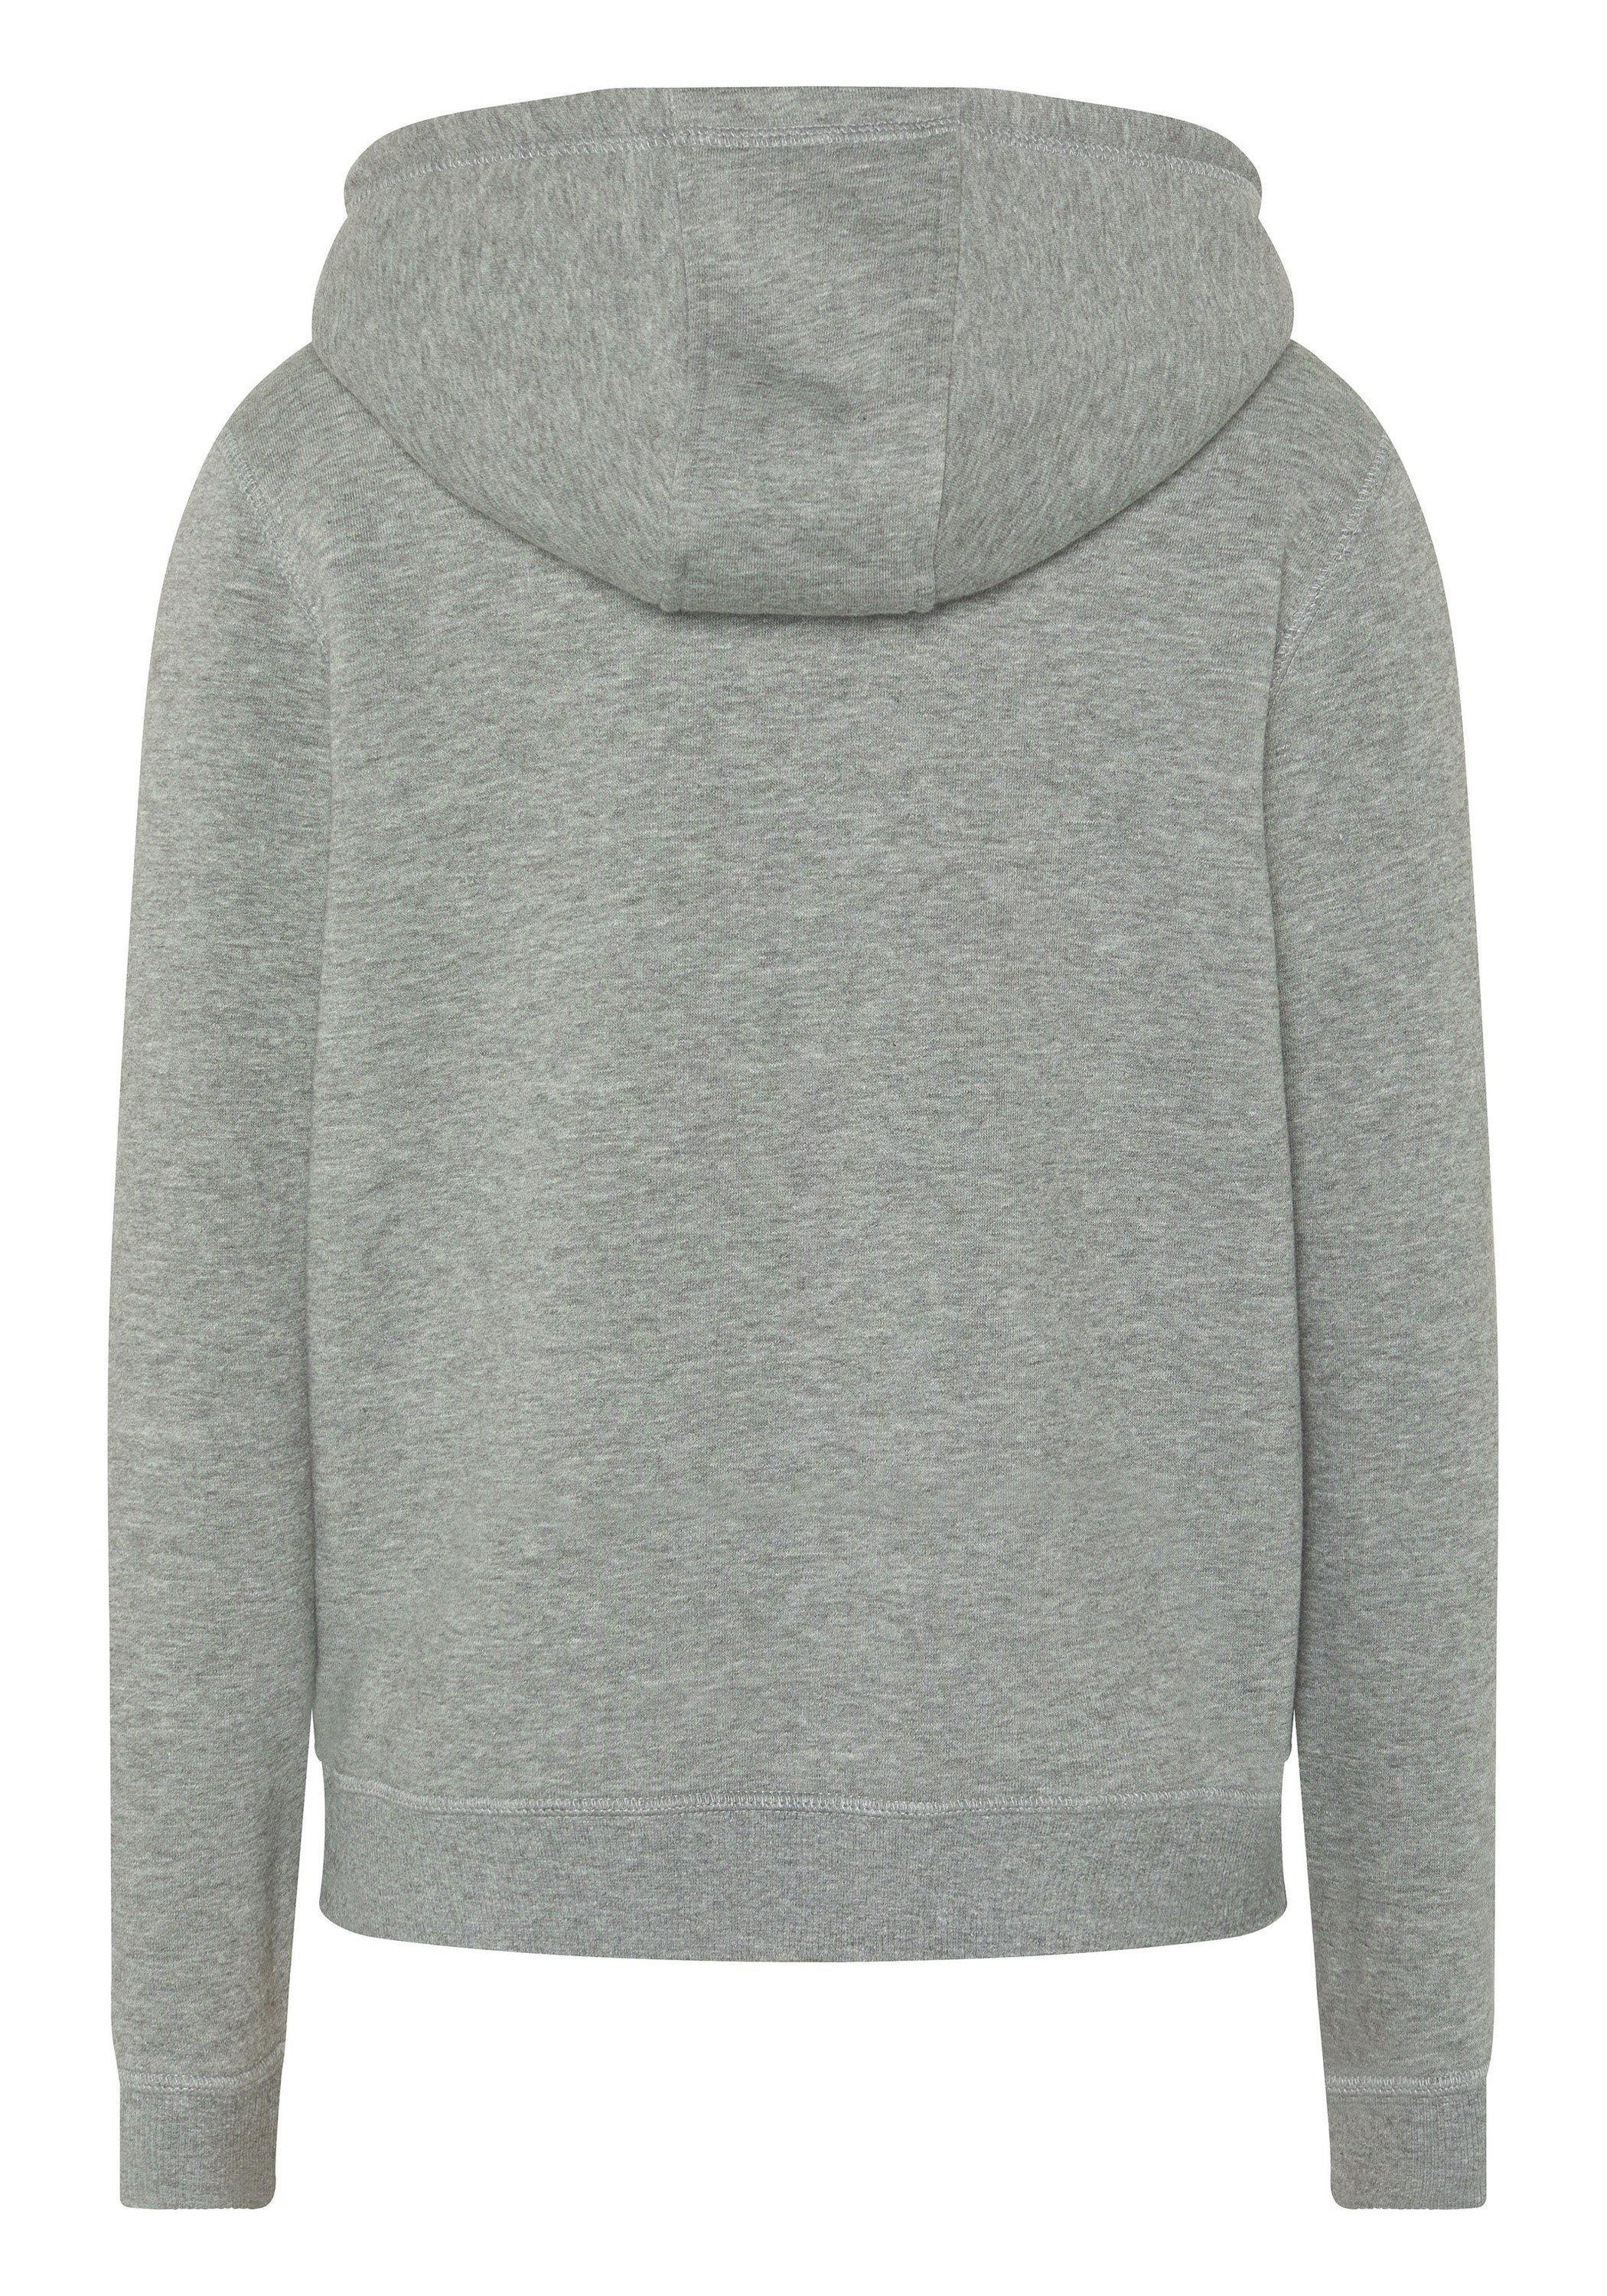 Neutral Hoodie Label-Mountain-Print mit Kapuzensweatshirt 1 Chiemsee 17-4402M Gray Melange